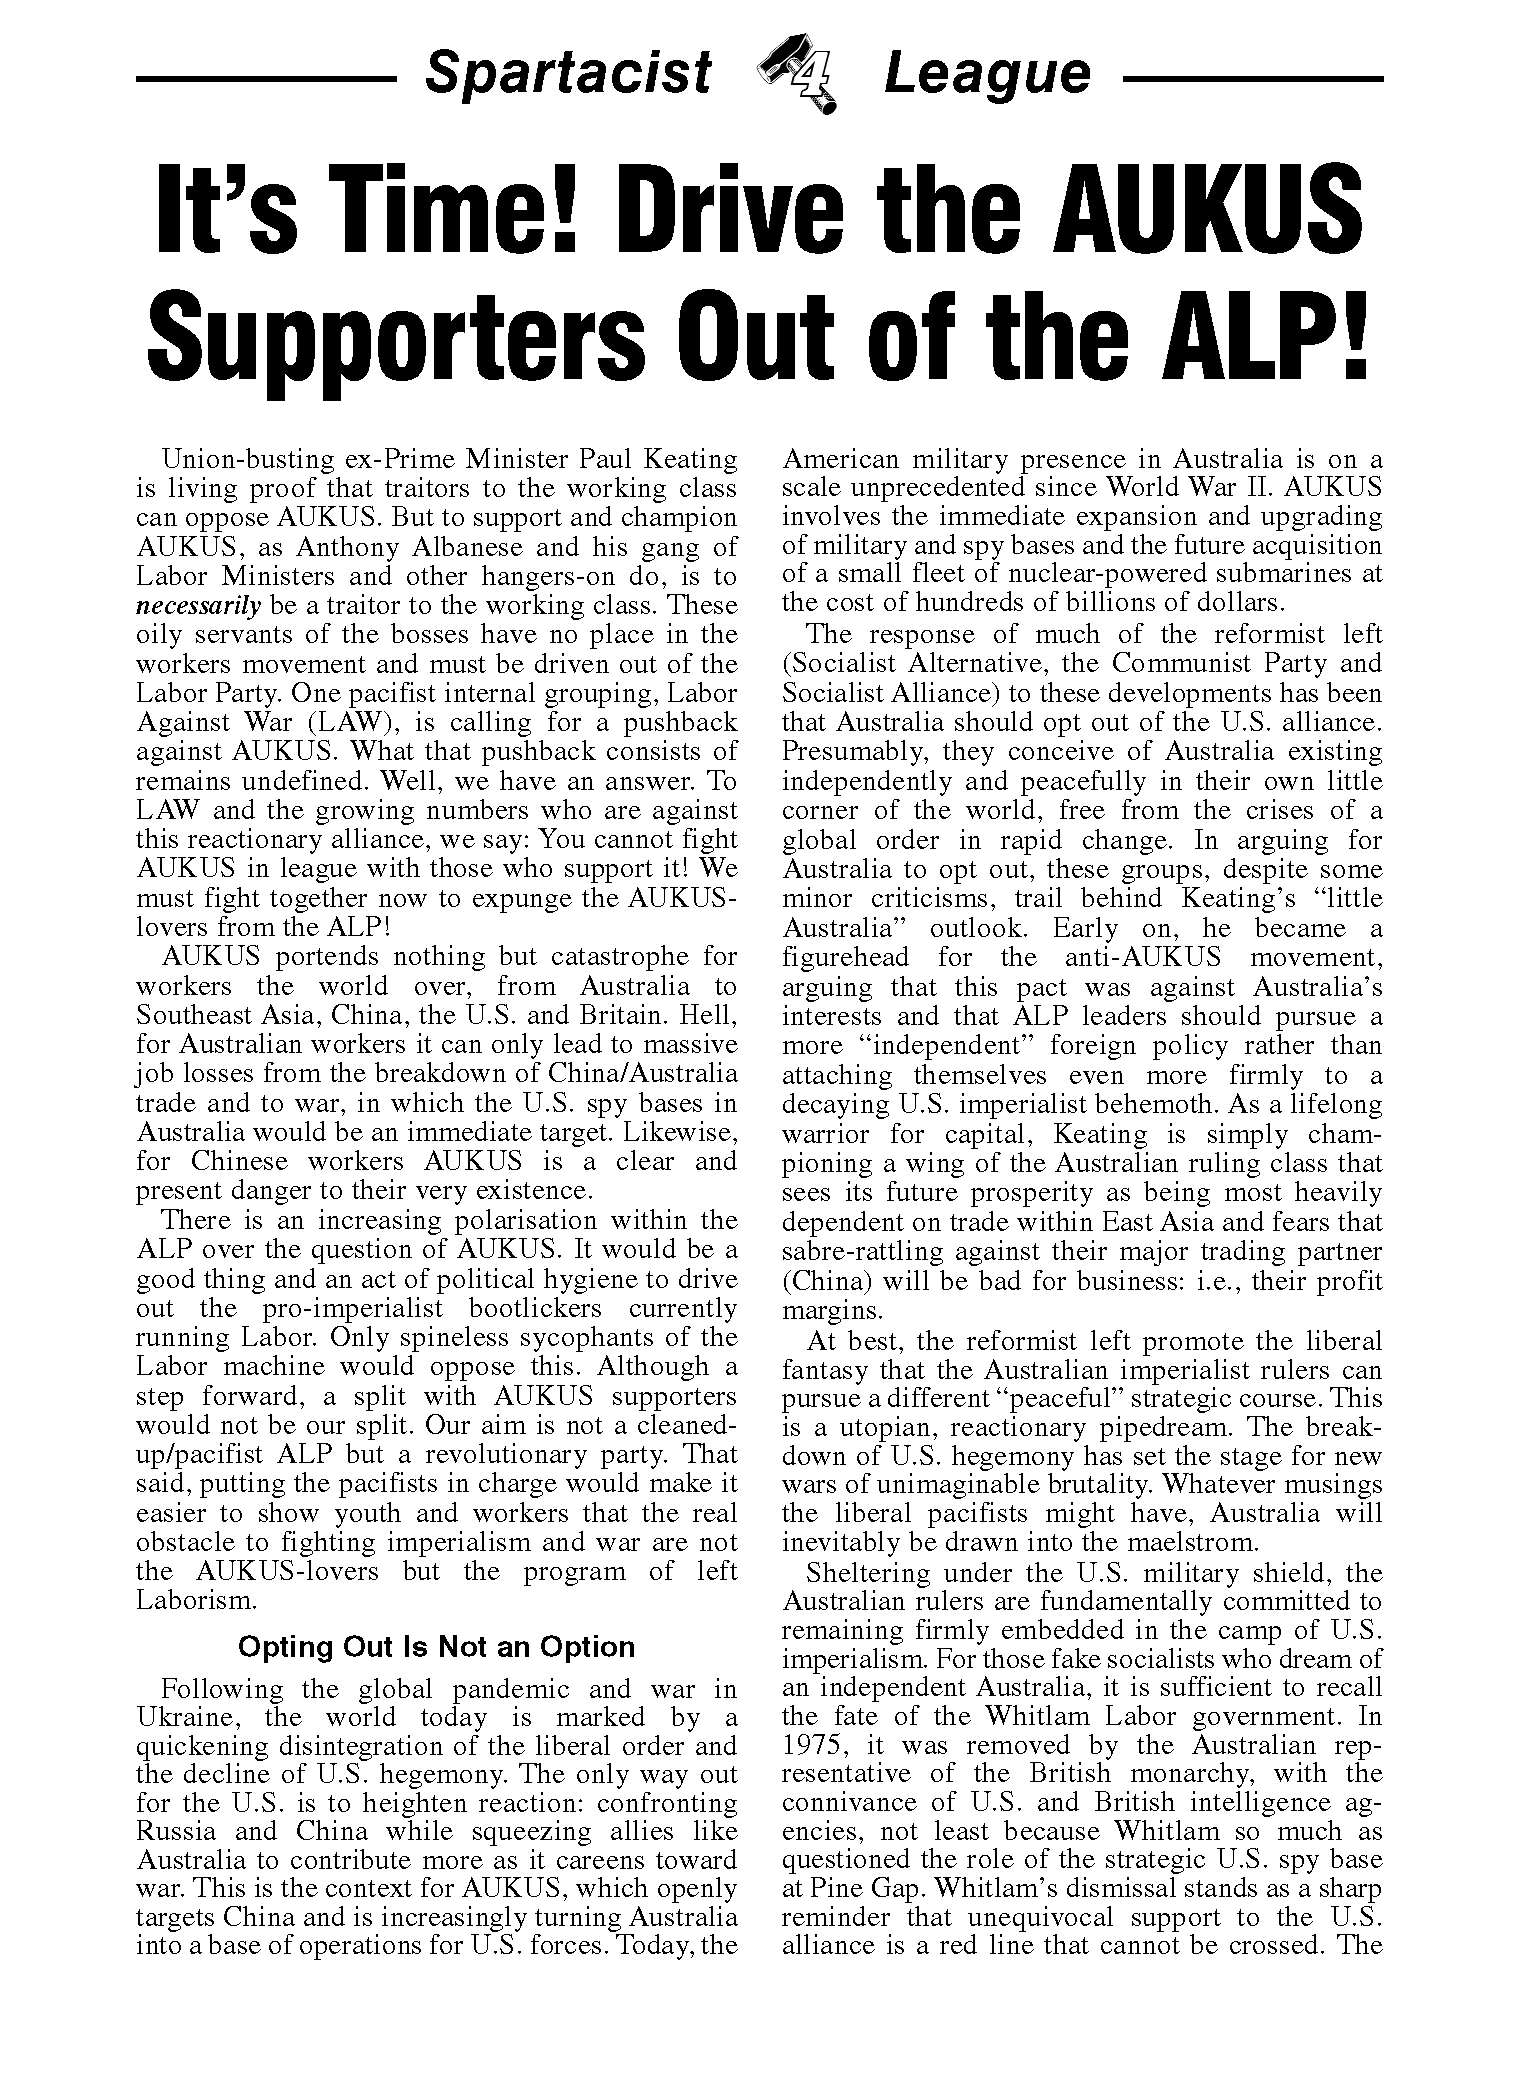 Spartacist League of Australia Statements  |  ١٣ أغسطس ٢٠٢٣